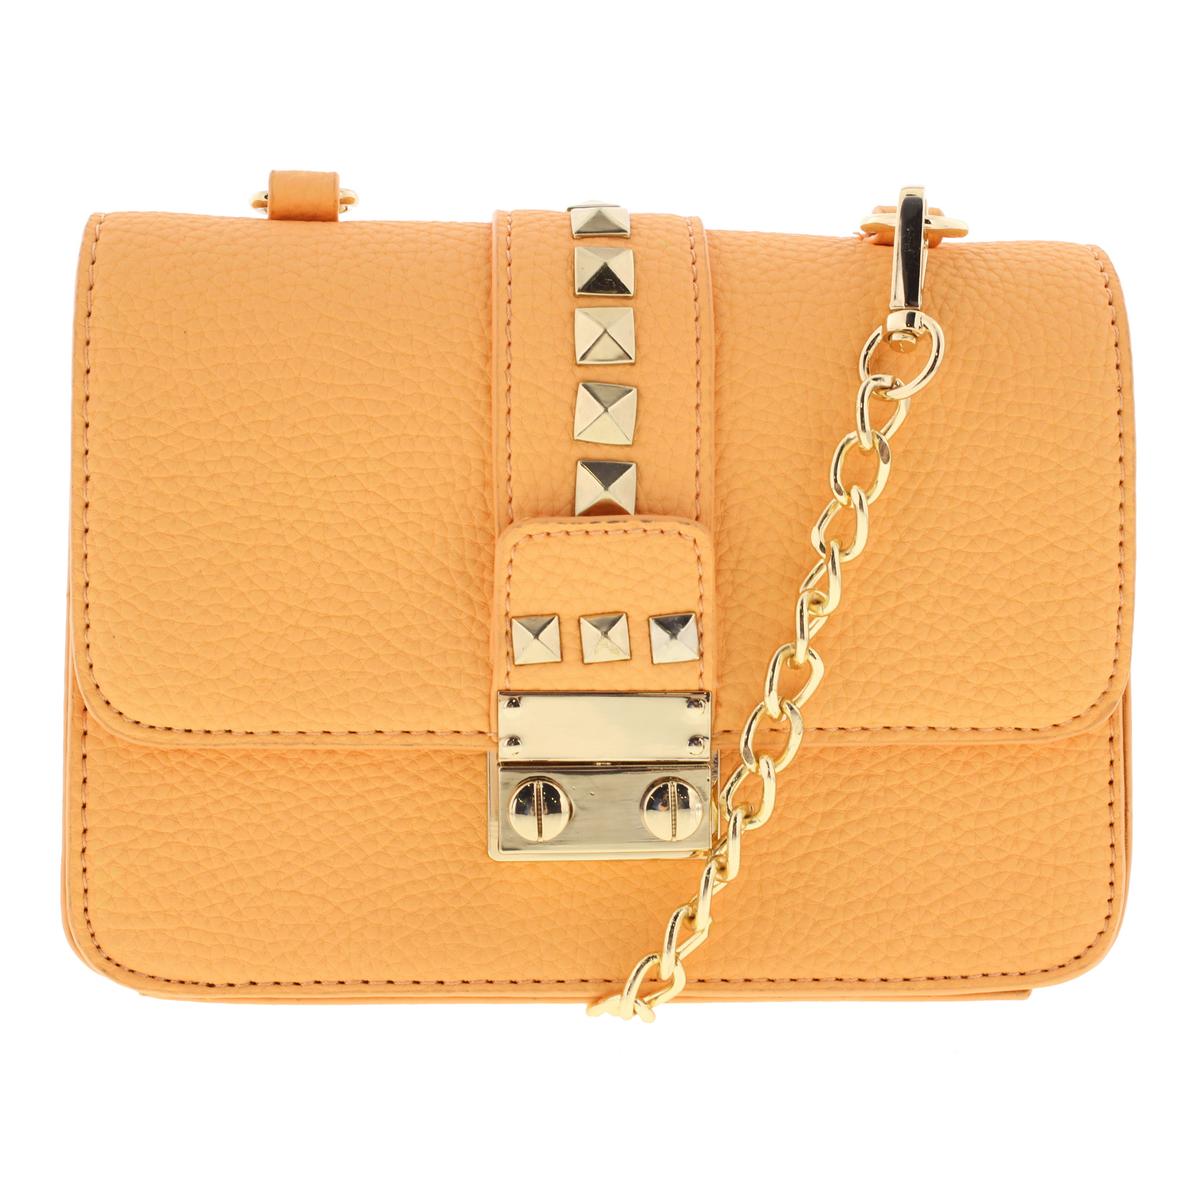 BCBG Paris 7161 Womens Orange Faux Leather Crossbody Handbag Purse